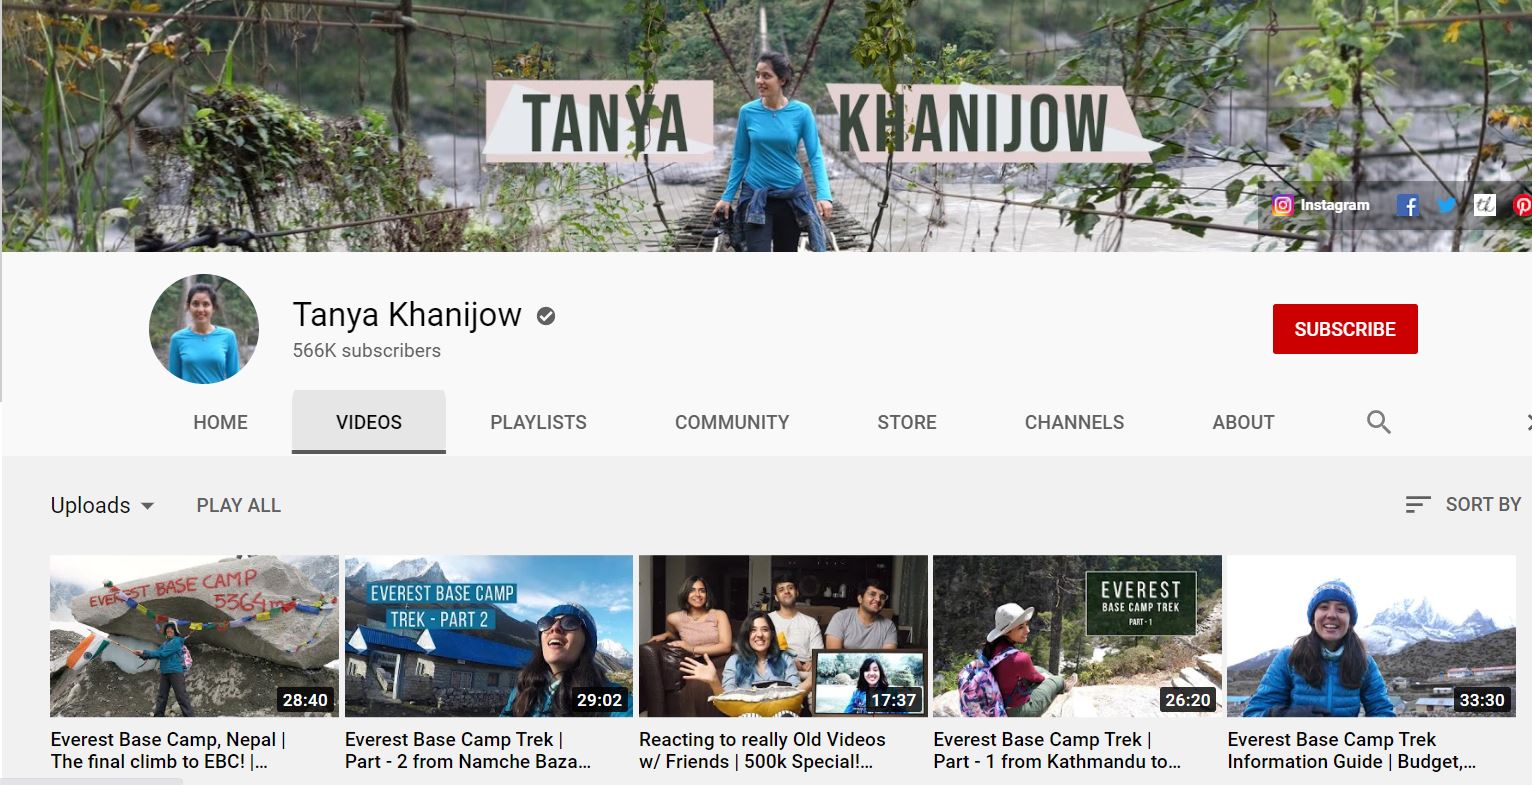 Tanya Khanijow's YouTube channel